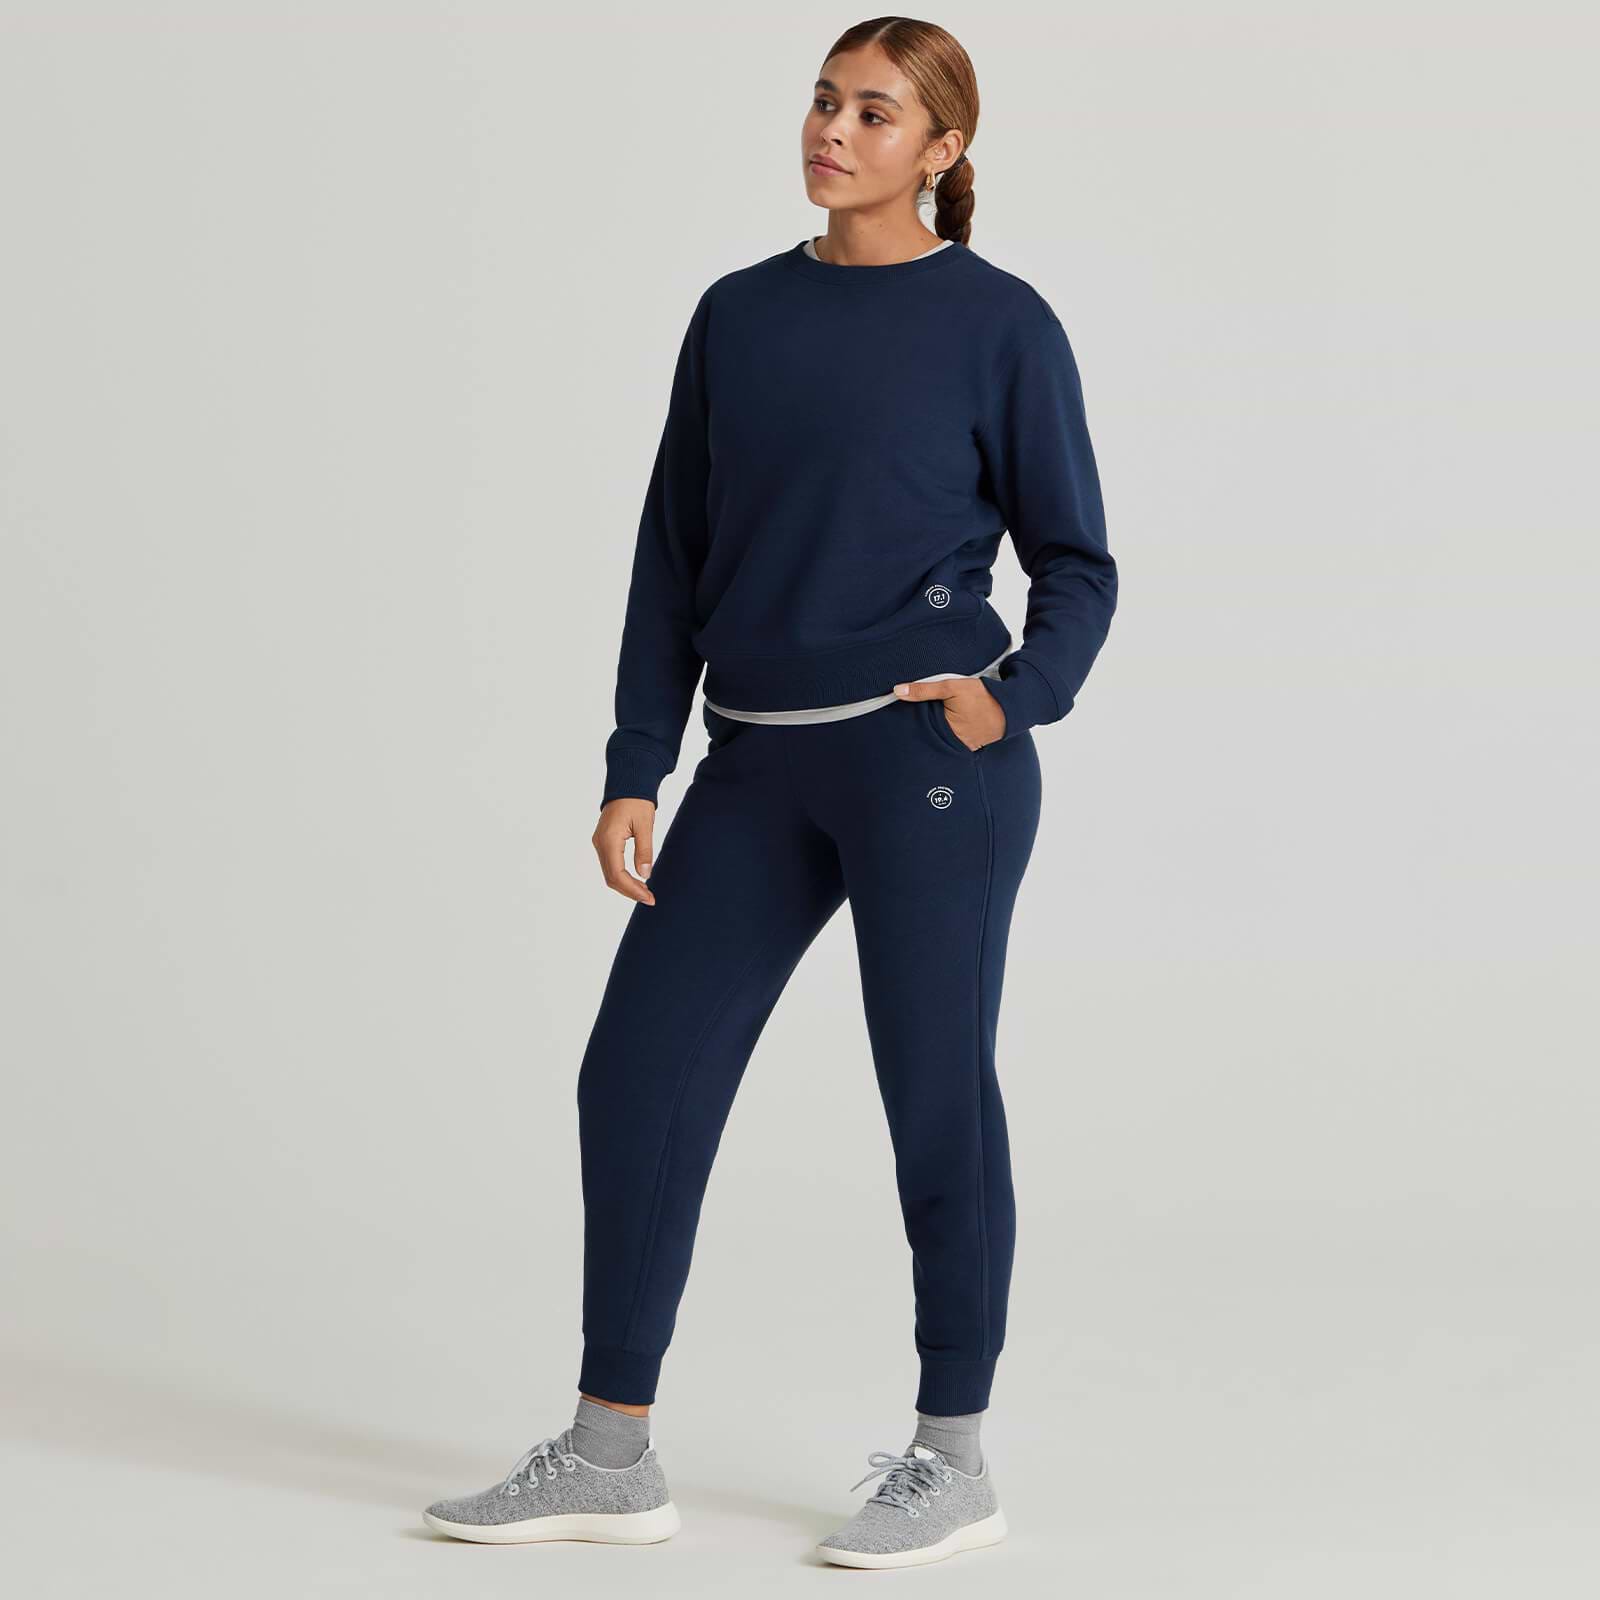 Women's R&R Sweatshirt - True Navy